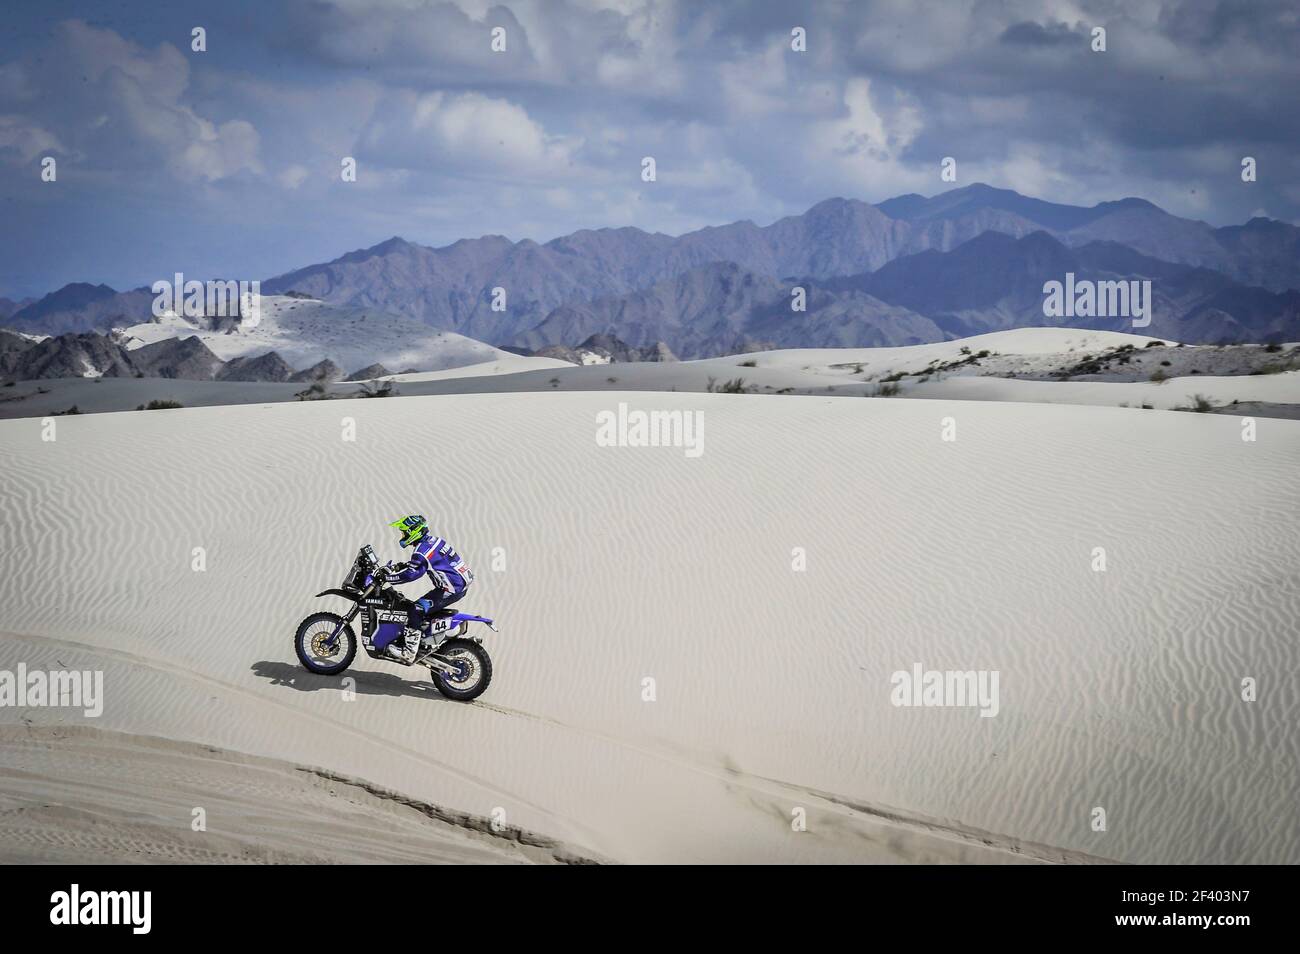 44 FAGOTTER RODNEY (AUS), YAMAHA, Moto, Bike, Aktion während der Dakar 2018, Etappe 11 Belen nach Chilecito, Argentinien, januar 17 - Foto DPPI Stockfoto